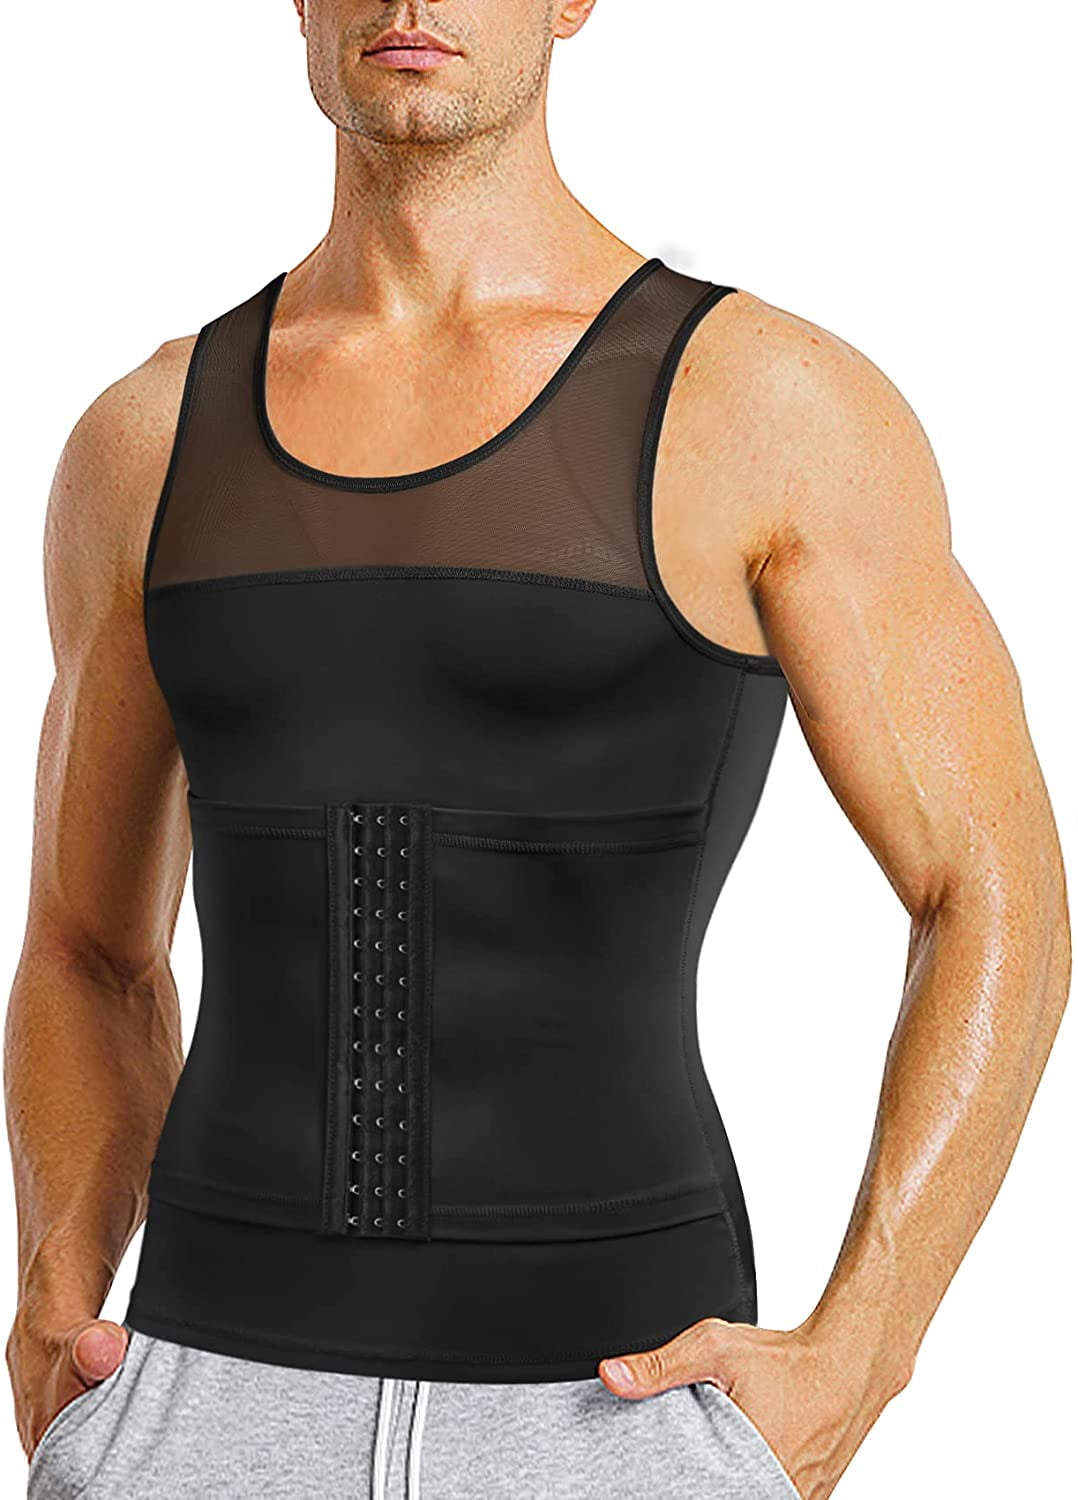 Gotoly Men Compression Shirt Shapewear Slimming Body Shaper Vest Undershirt Weight Loss Tank Top 